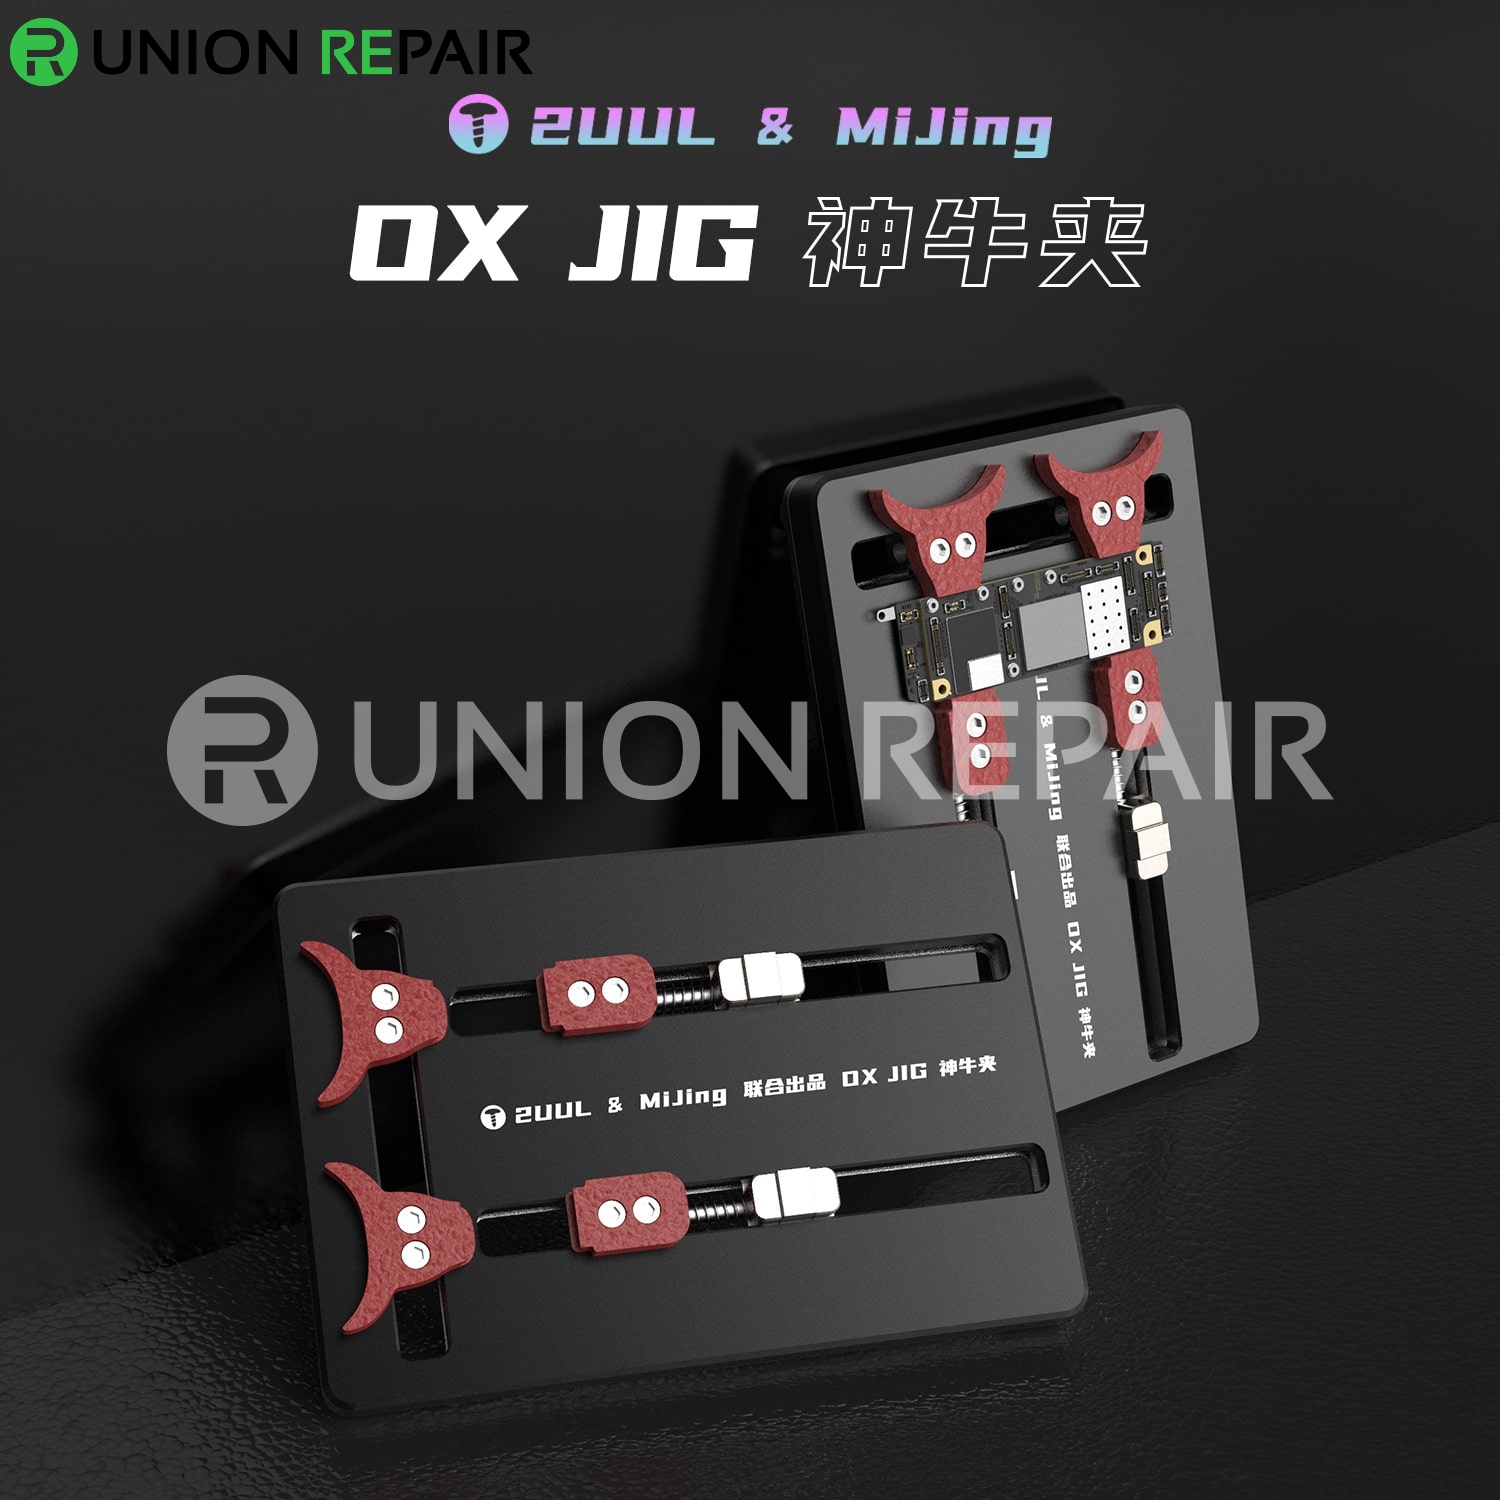 2UUL OX JIG Multifunction PCB Board Holder Fixture